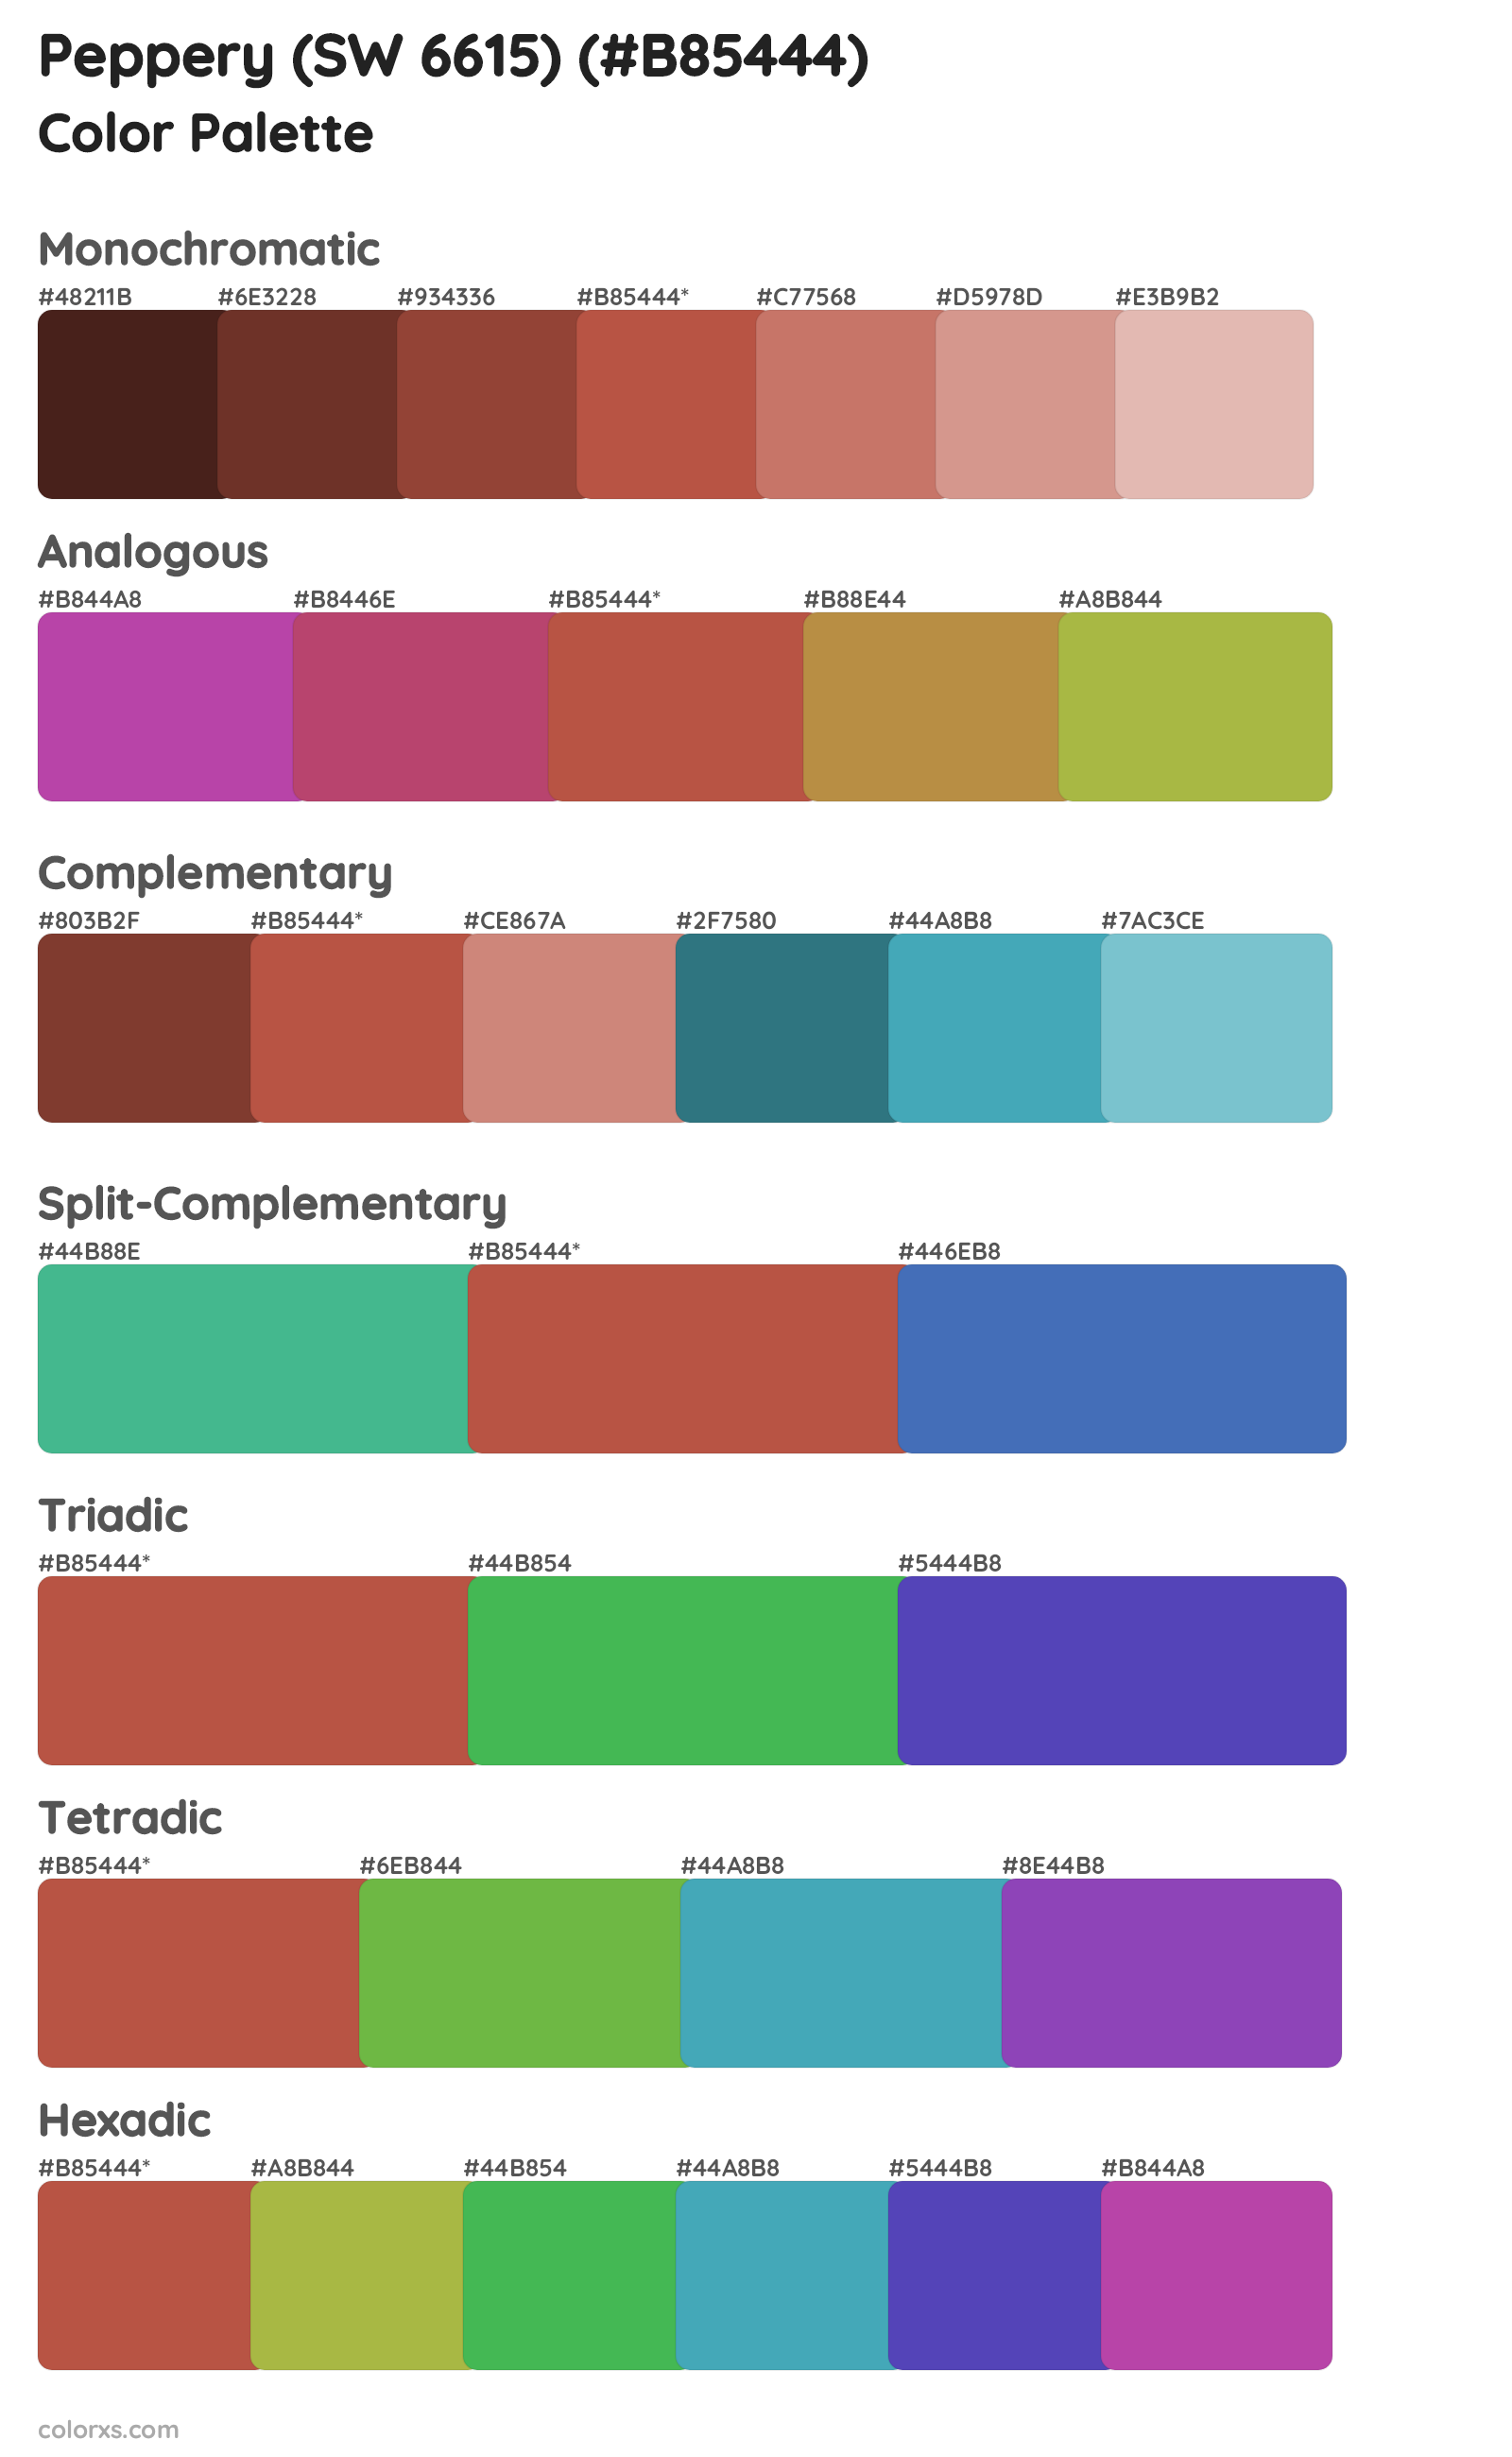 Peppery (SW 6615) Color Scheme Palettes